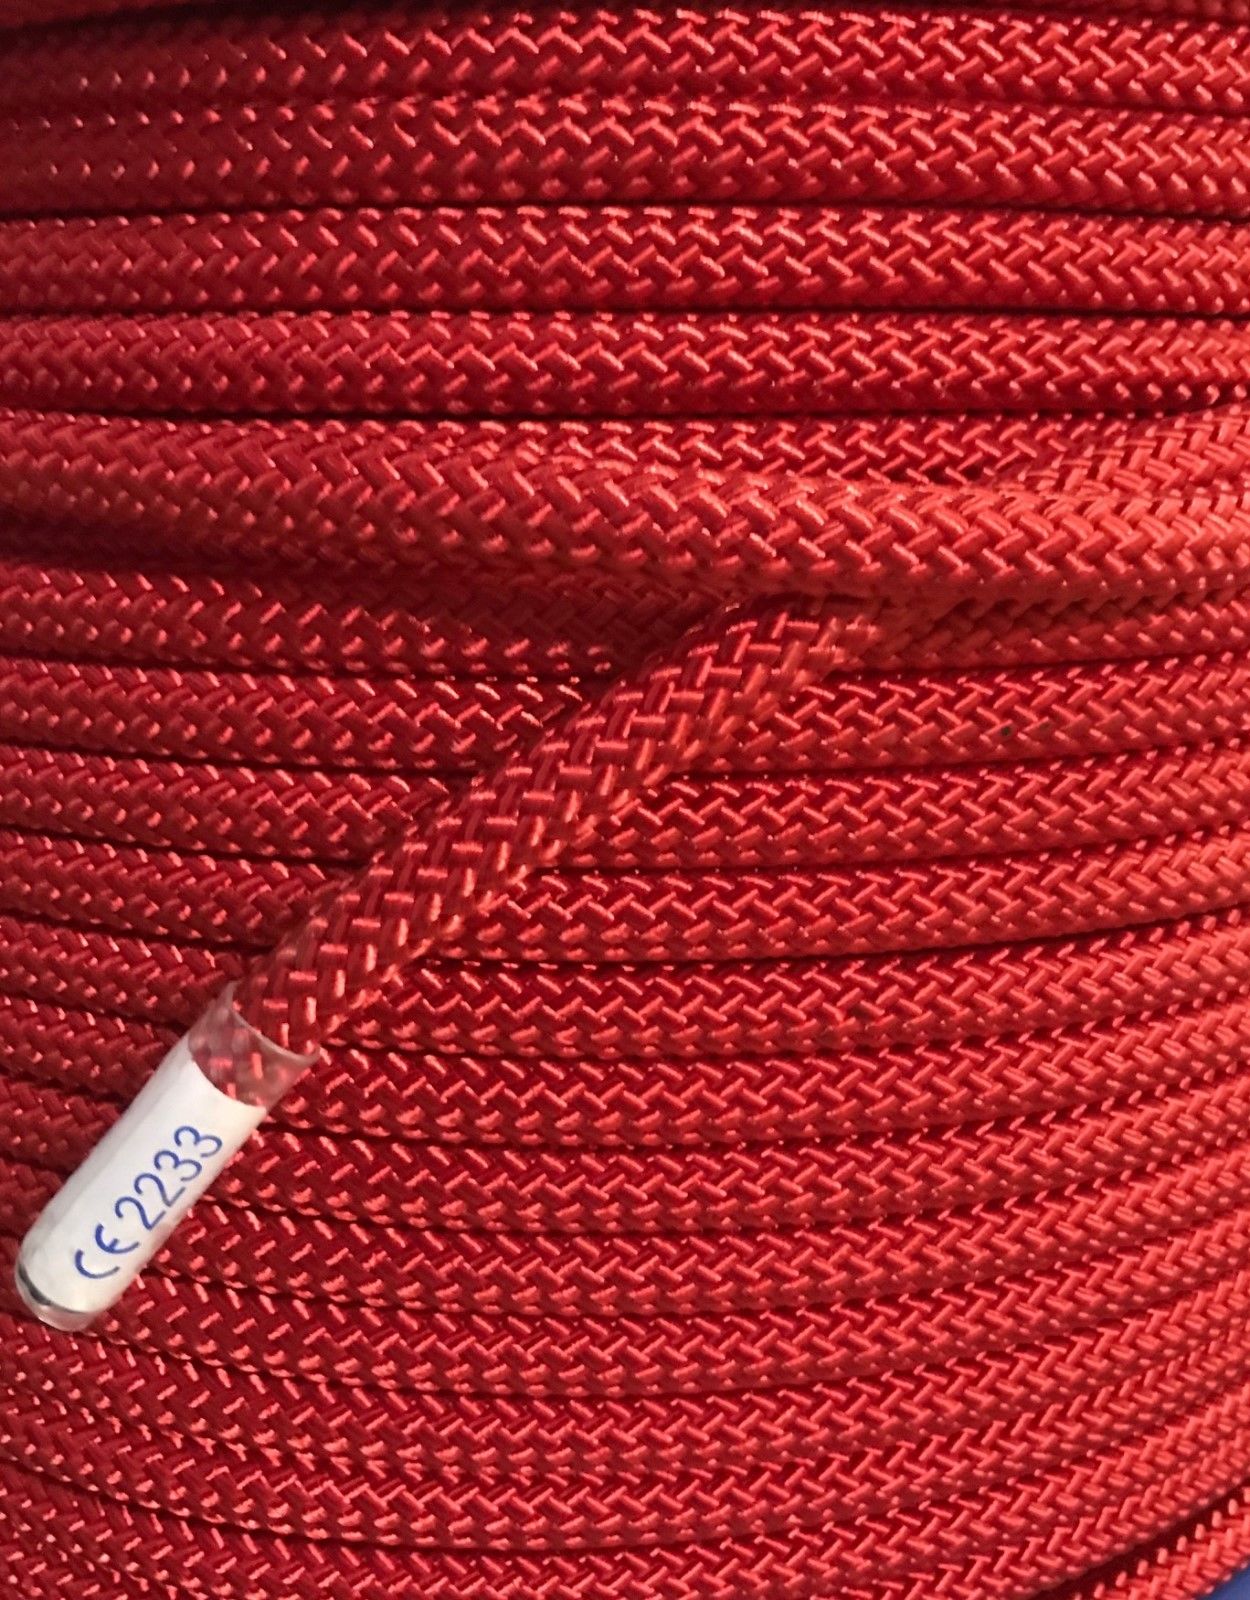 LSK climbing rope 10.5mm